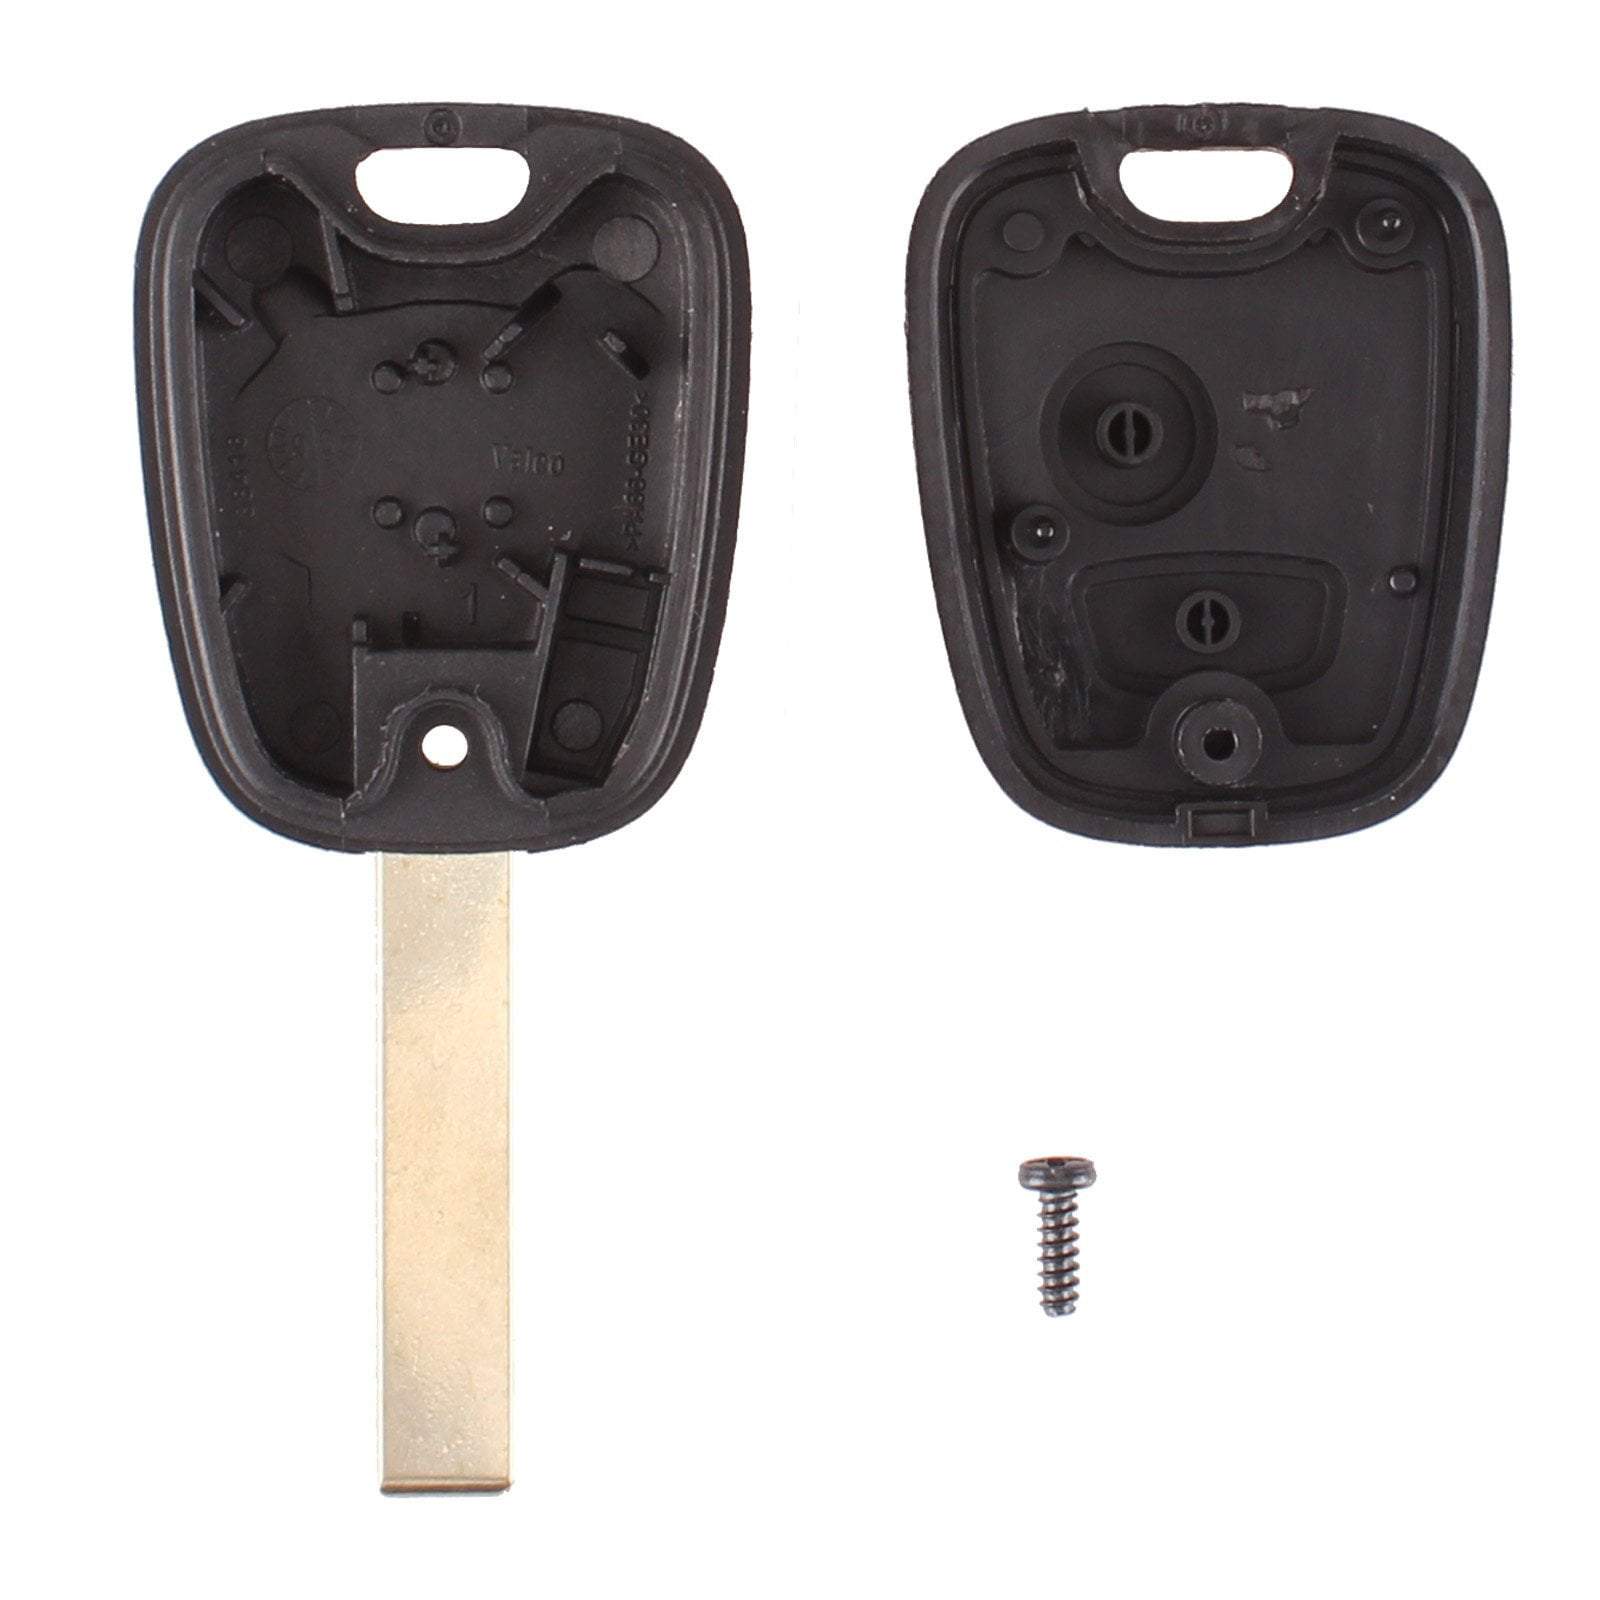 Fekete színű, 2 gombos Peugeot kulcs, kulcsház belseje. HU83 kulcsszárral.